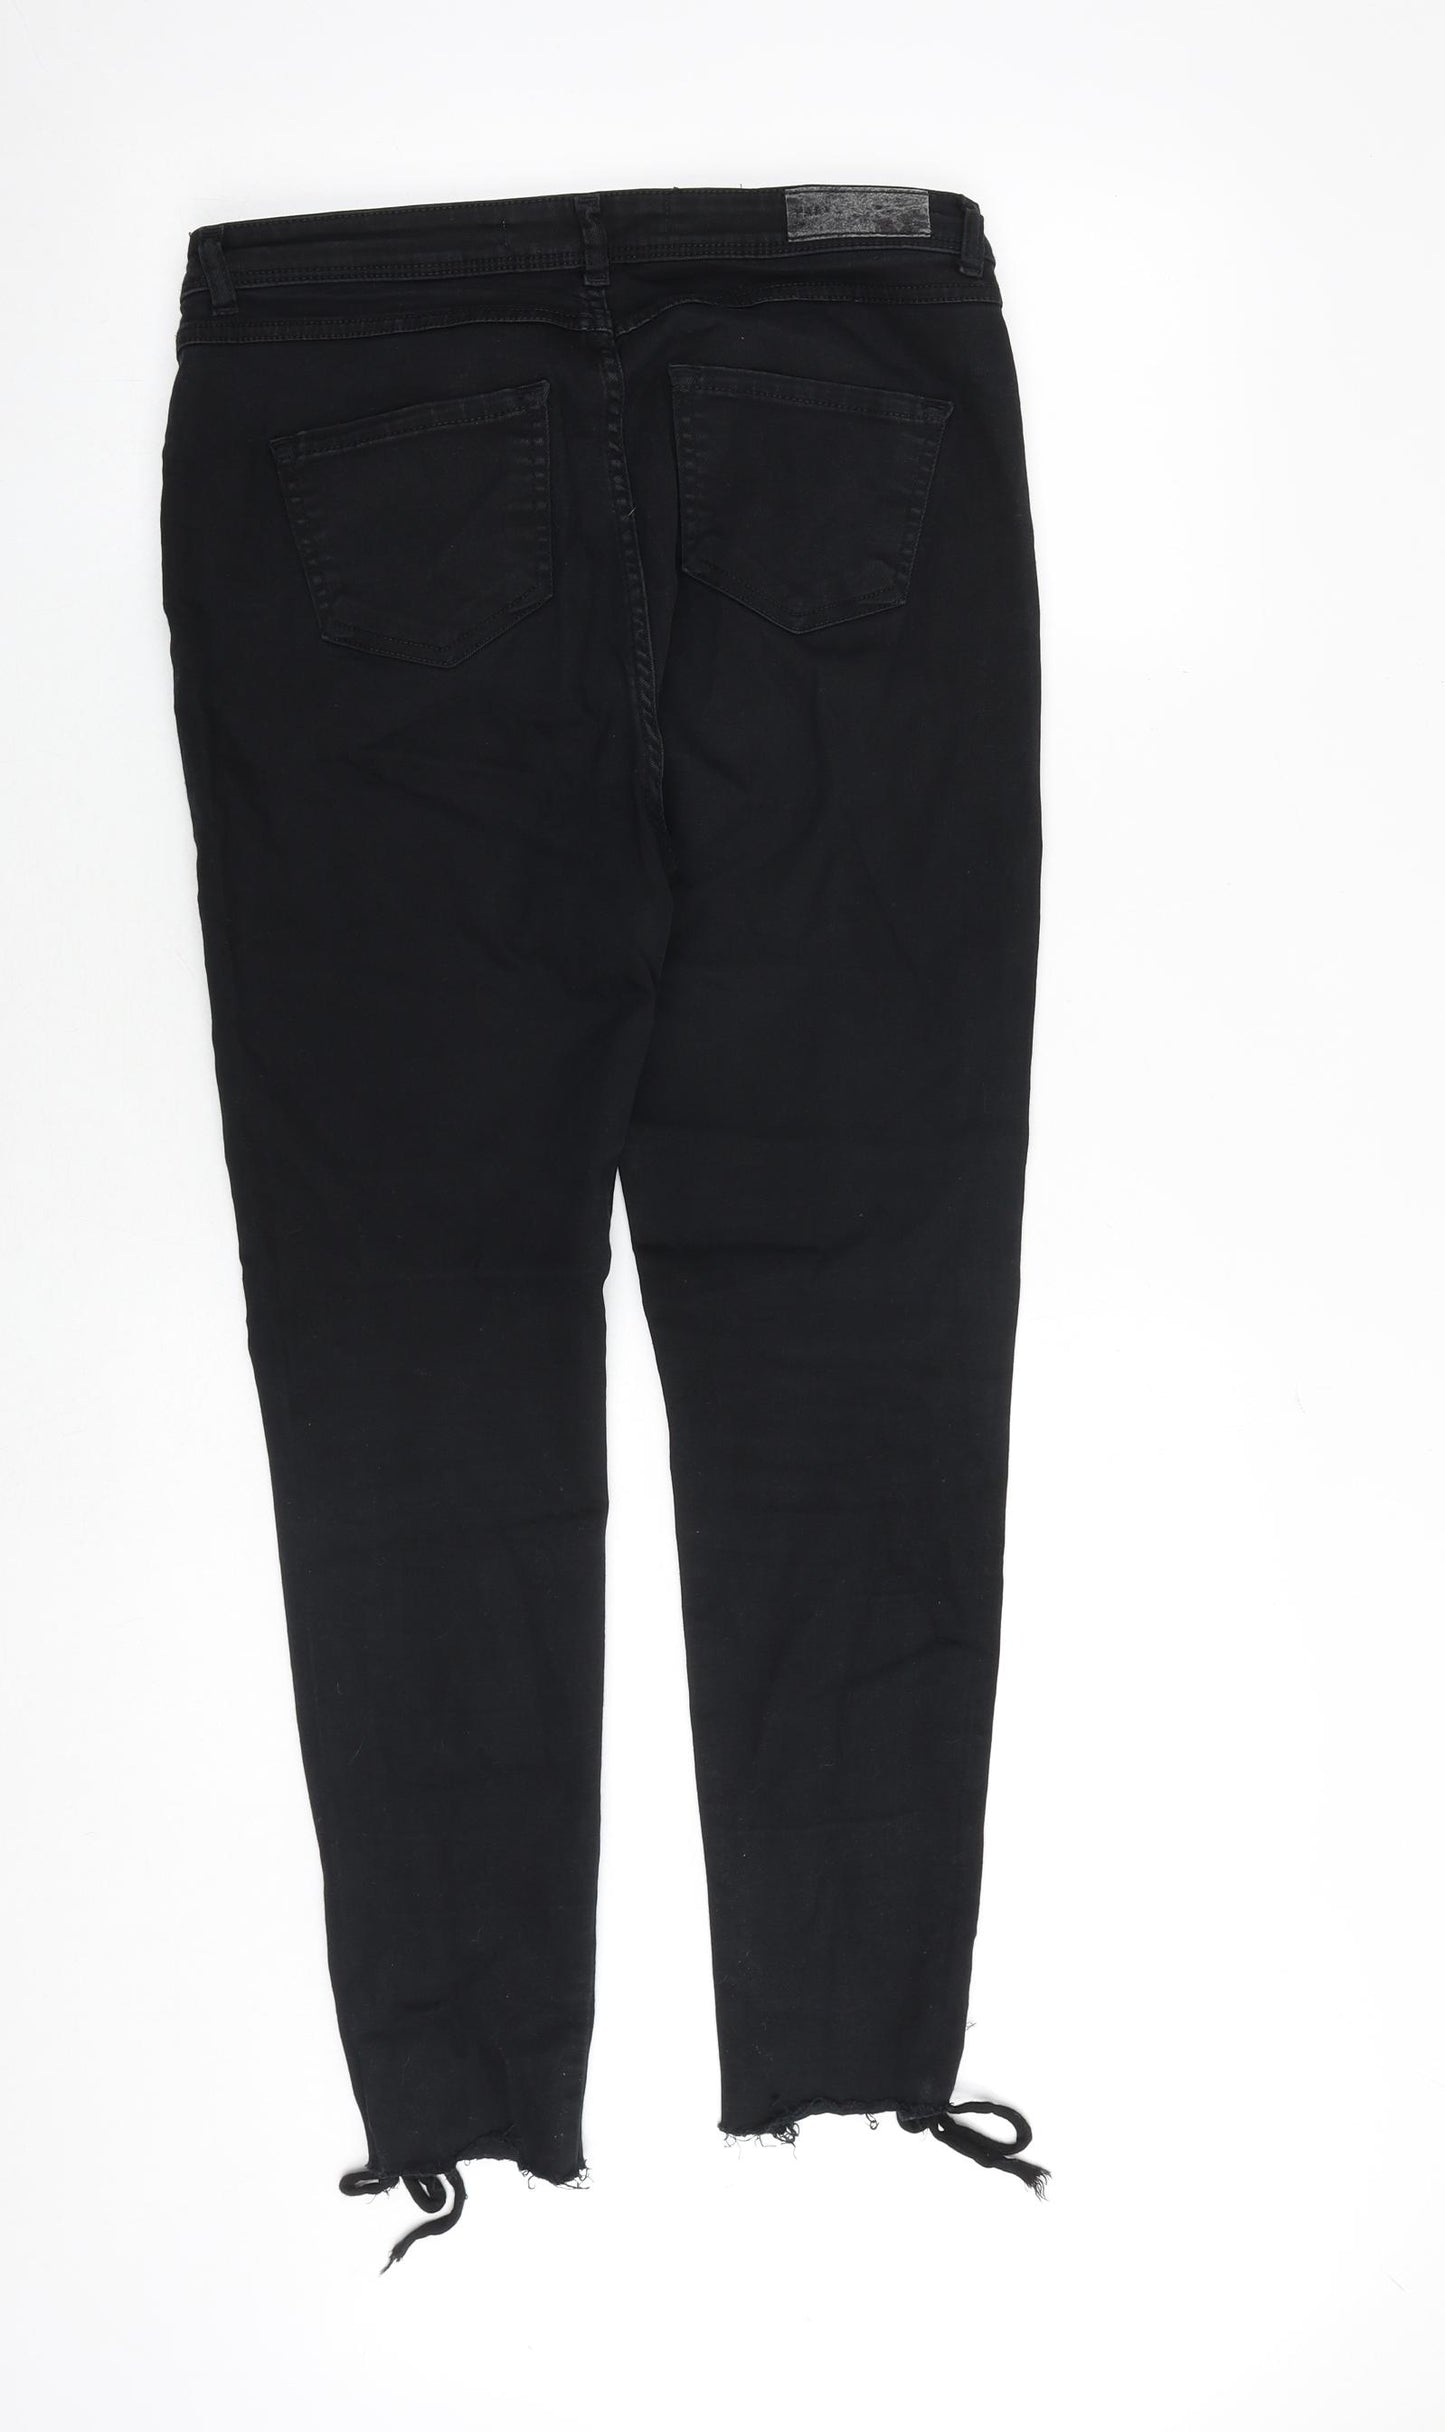 Paper + Stitch Womens Black Cotton Skinny Jeans Size 32 in Regular Zip